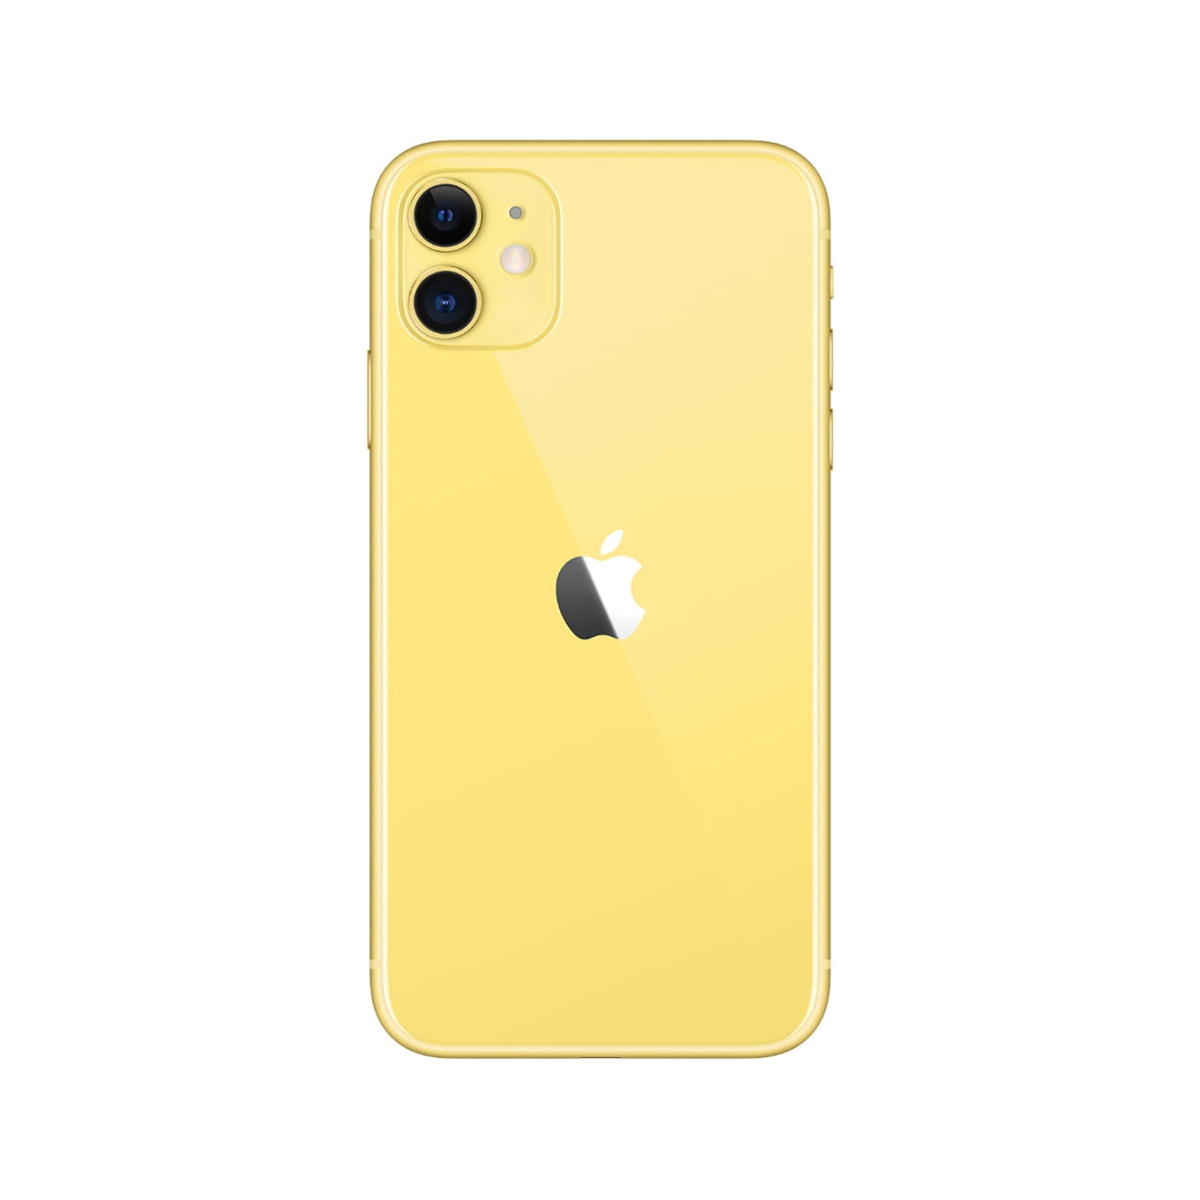 Apple iPhone 11 256gb Tela 6.1' Cam 12mp Mostruário